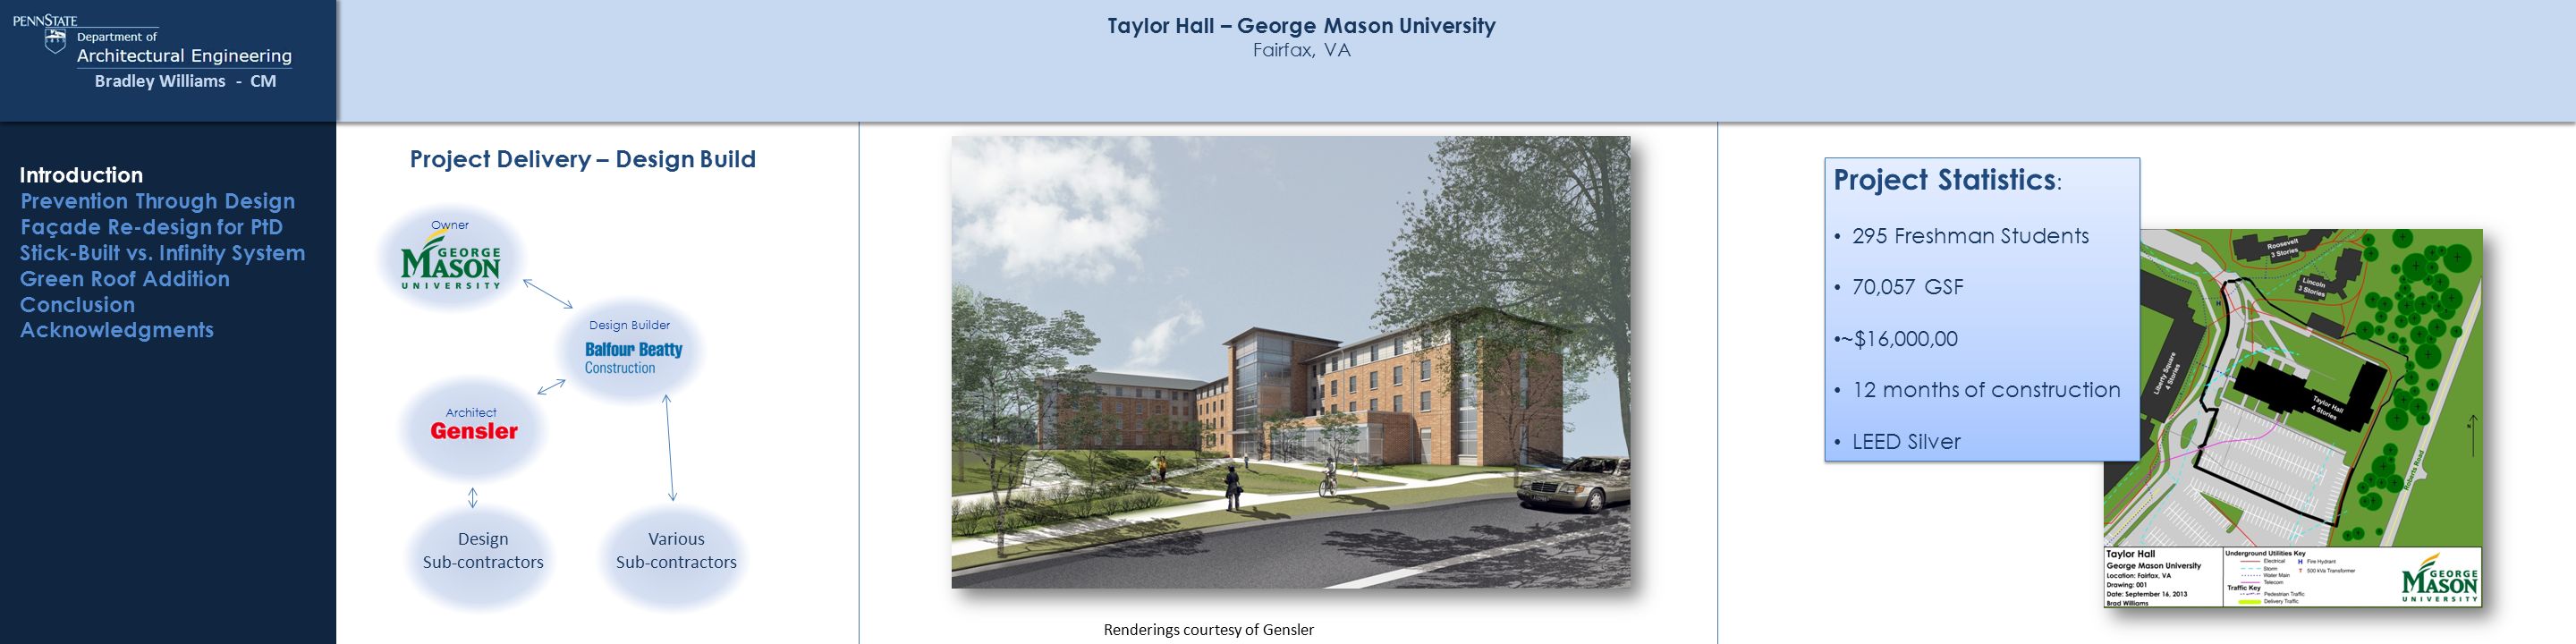 Taylor Hall George Mason University Fairfax VA Advisor Ed Gannon